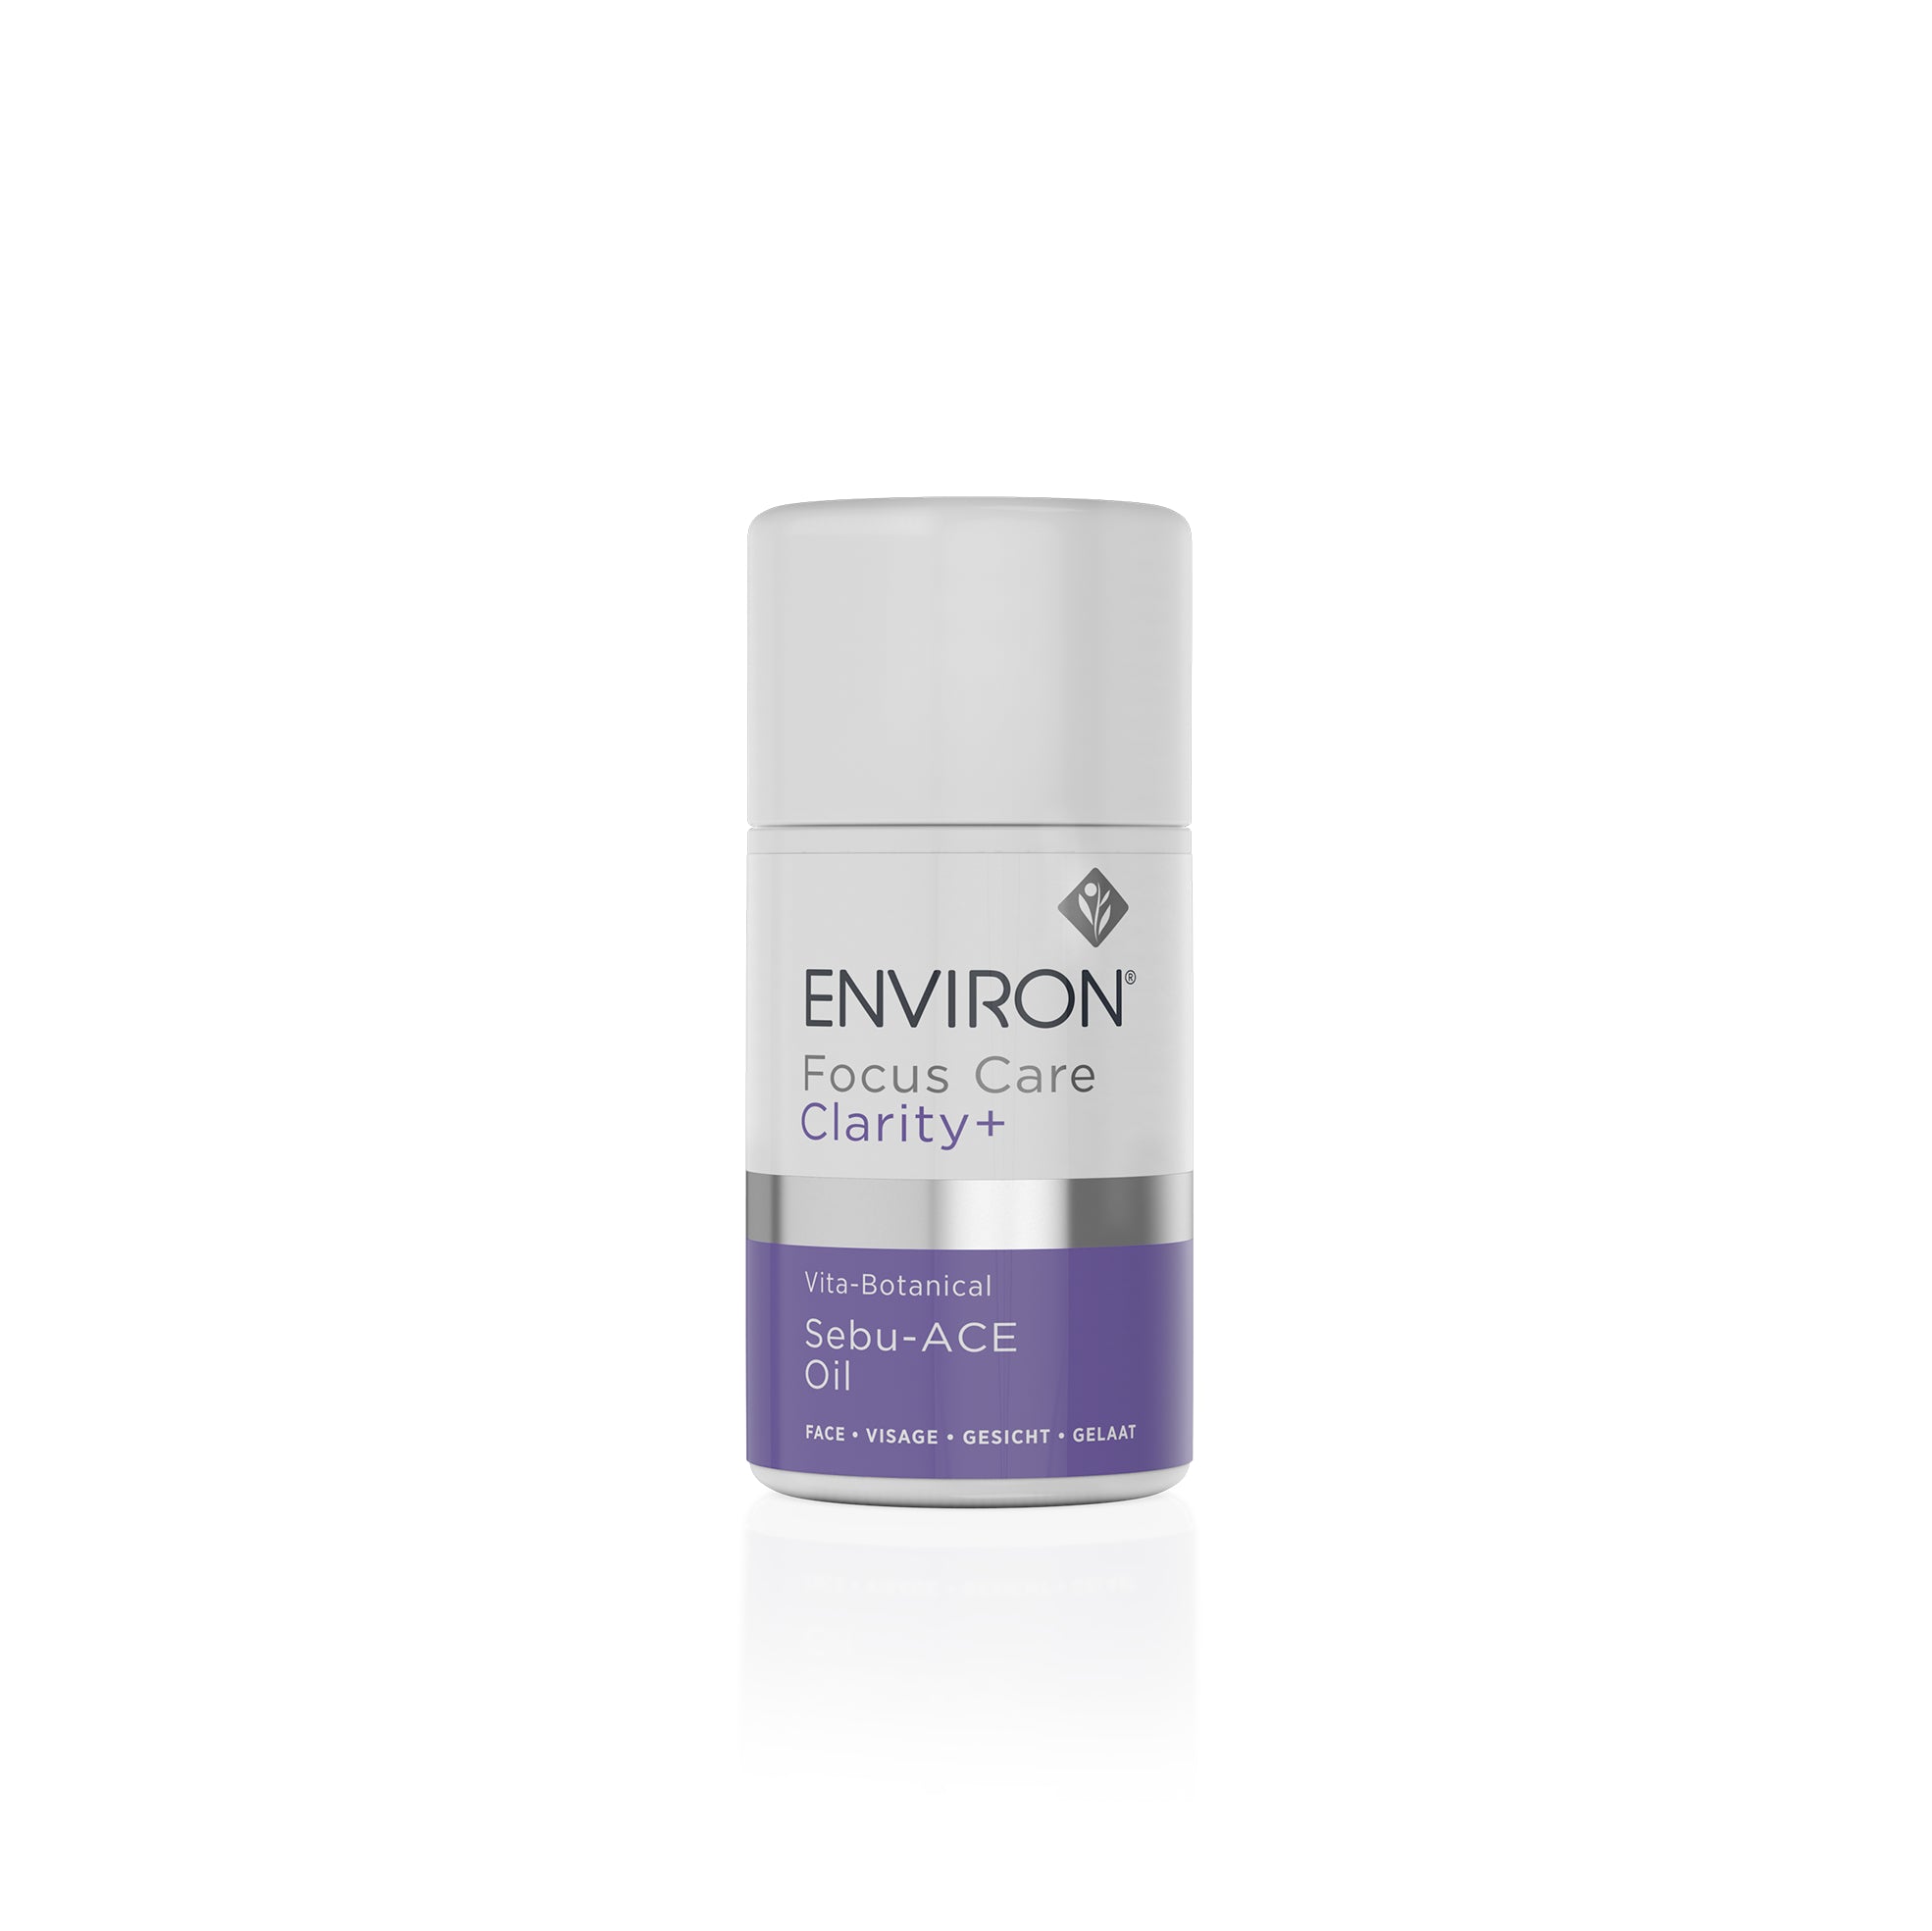 Environ Focus Care™ Clarity+ range - Vita-Botanical Sebu-ACE Oil